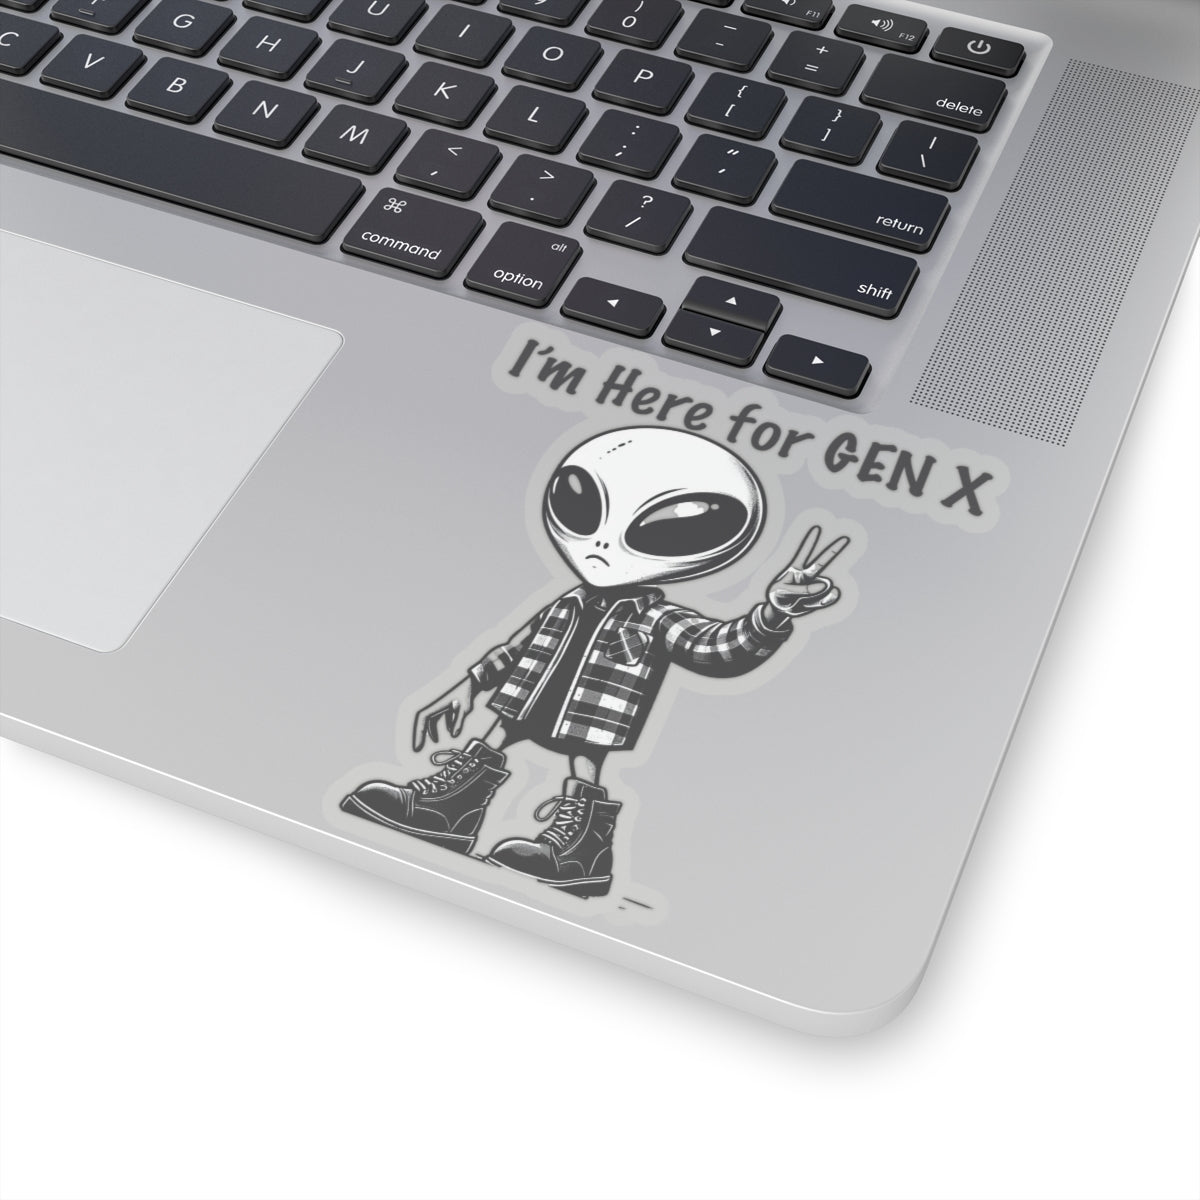 Gen X Alien ~ I'm here for Gen X very large transparent sticker